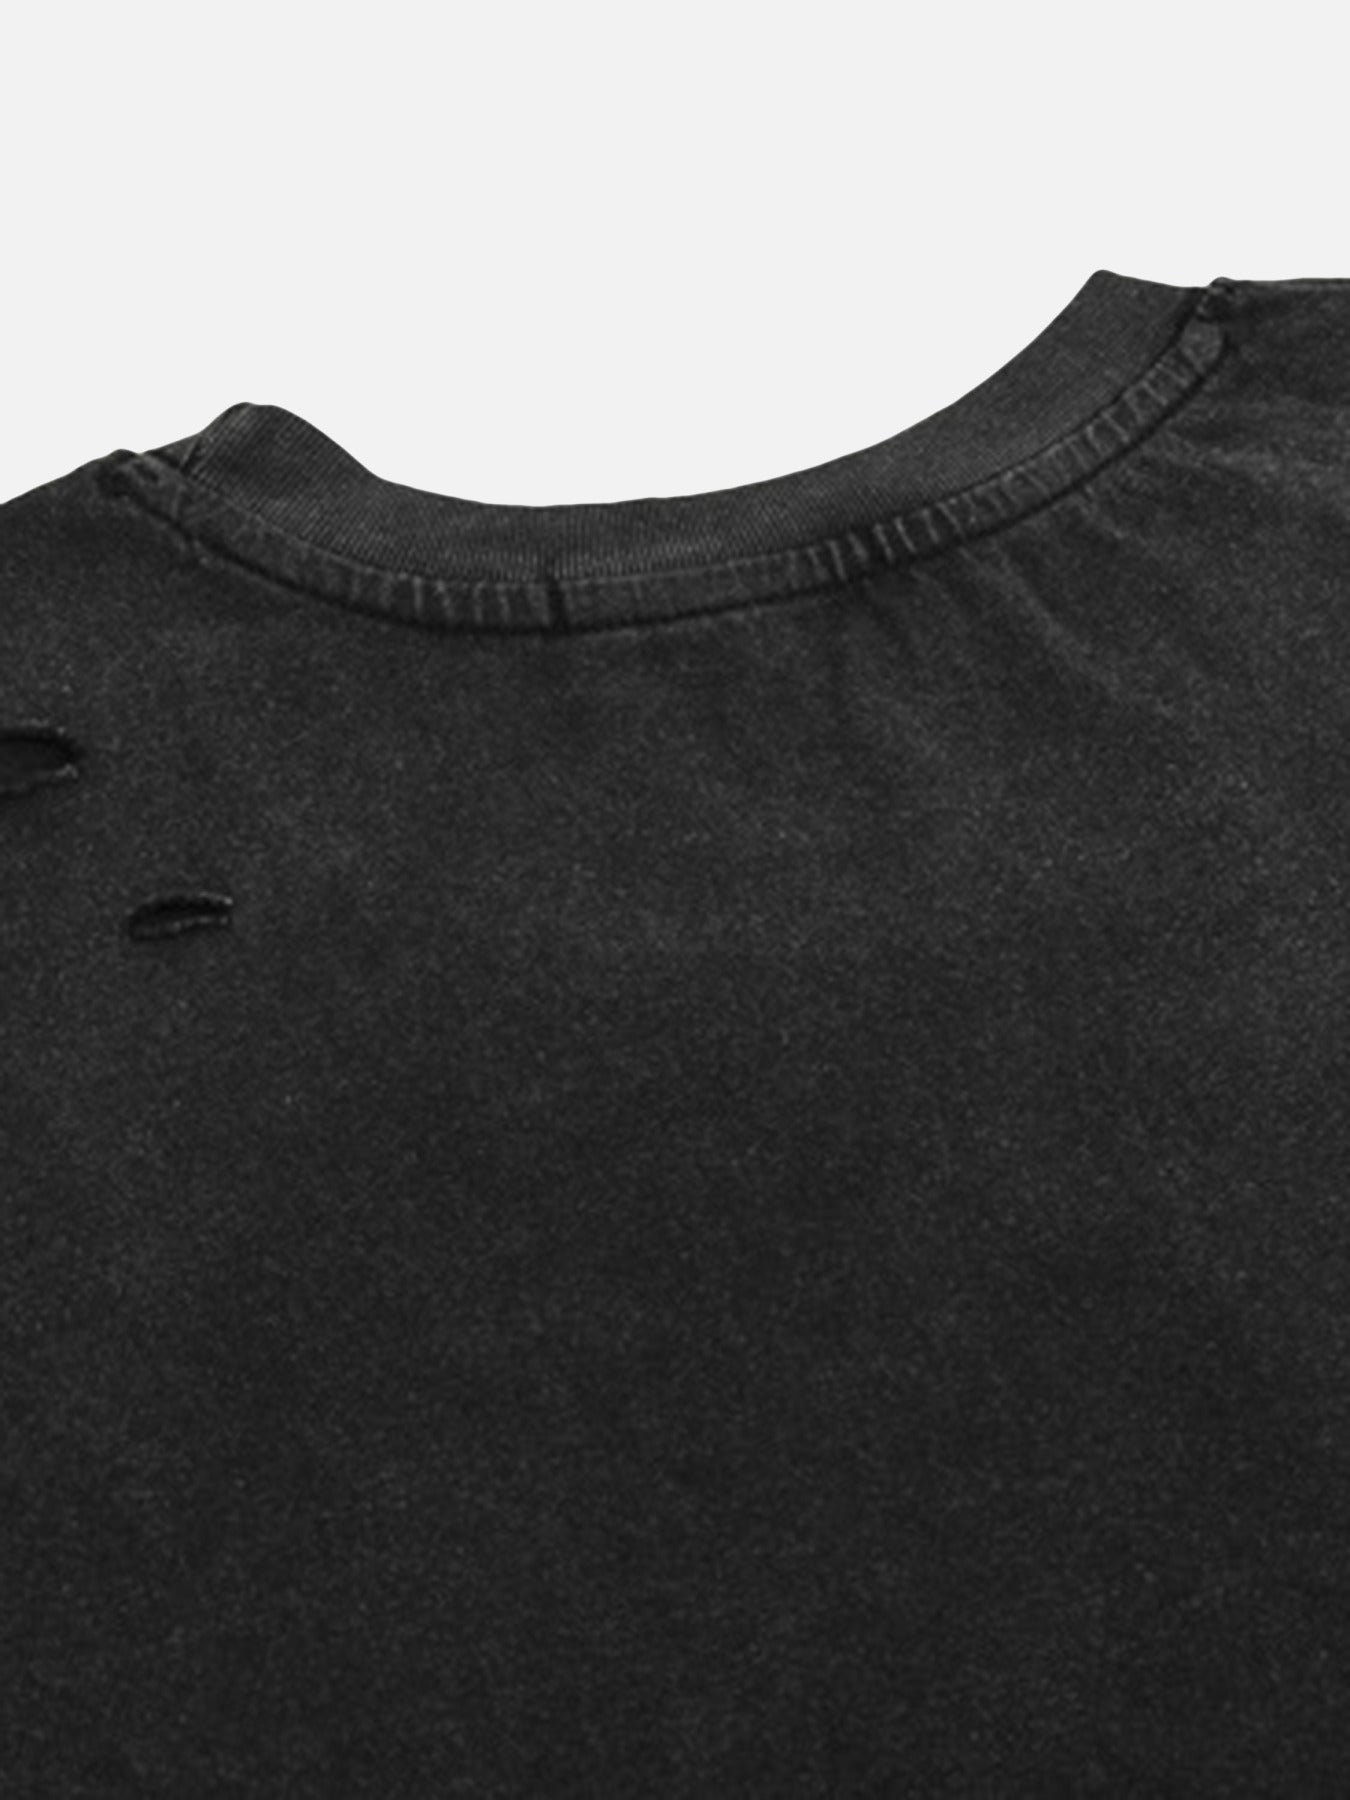 The Supermade Vintage Sleeveless Vest